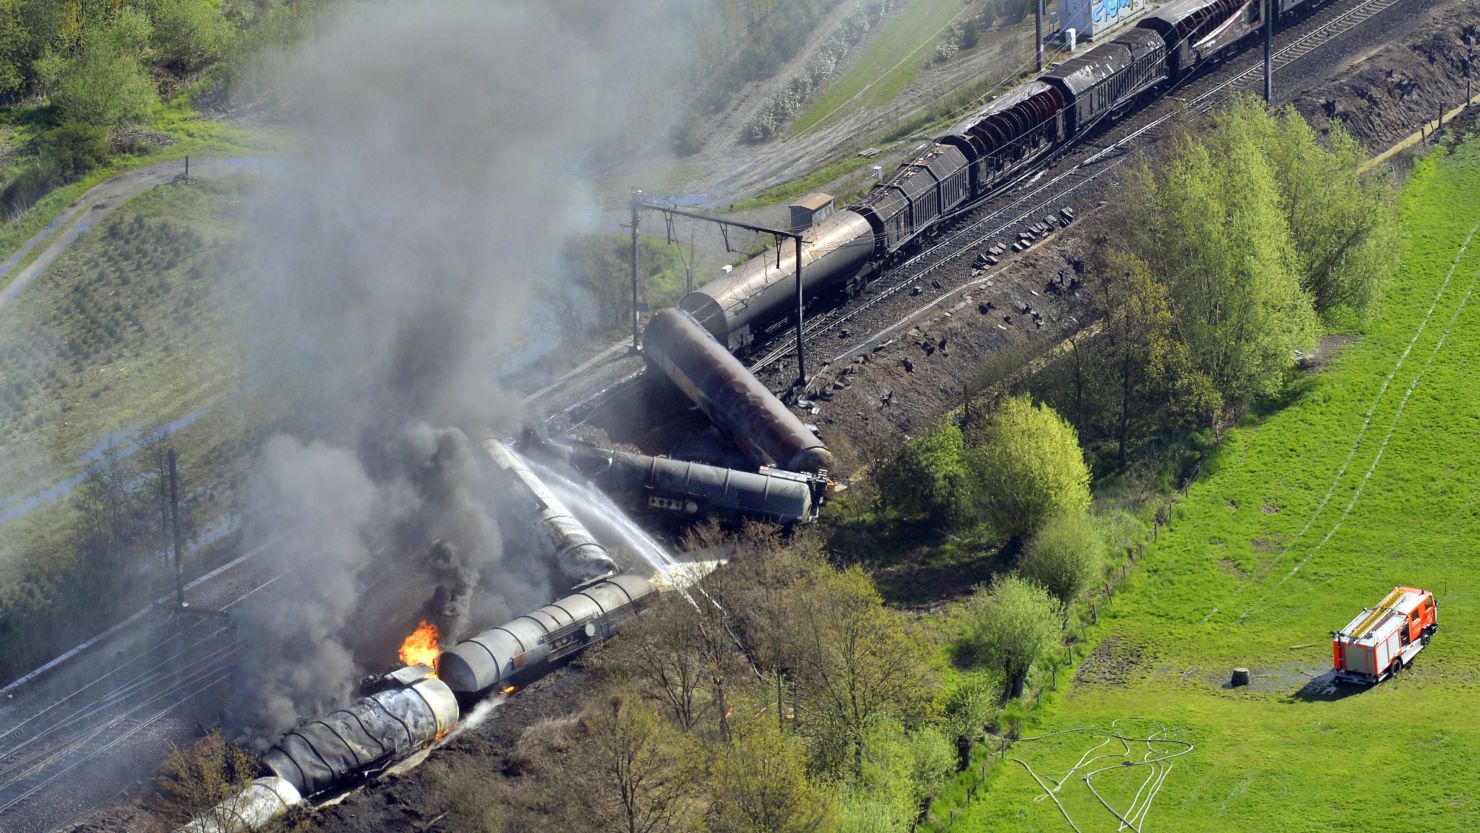 The freight train derailed in the northwestern part of Belgium, between Schellebelle and Wetteren.